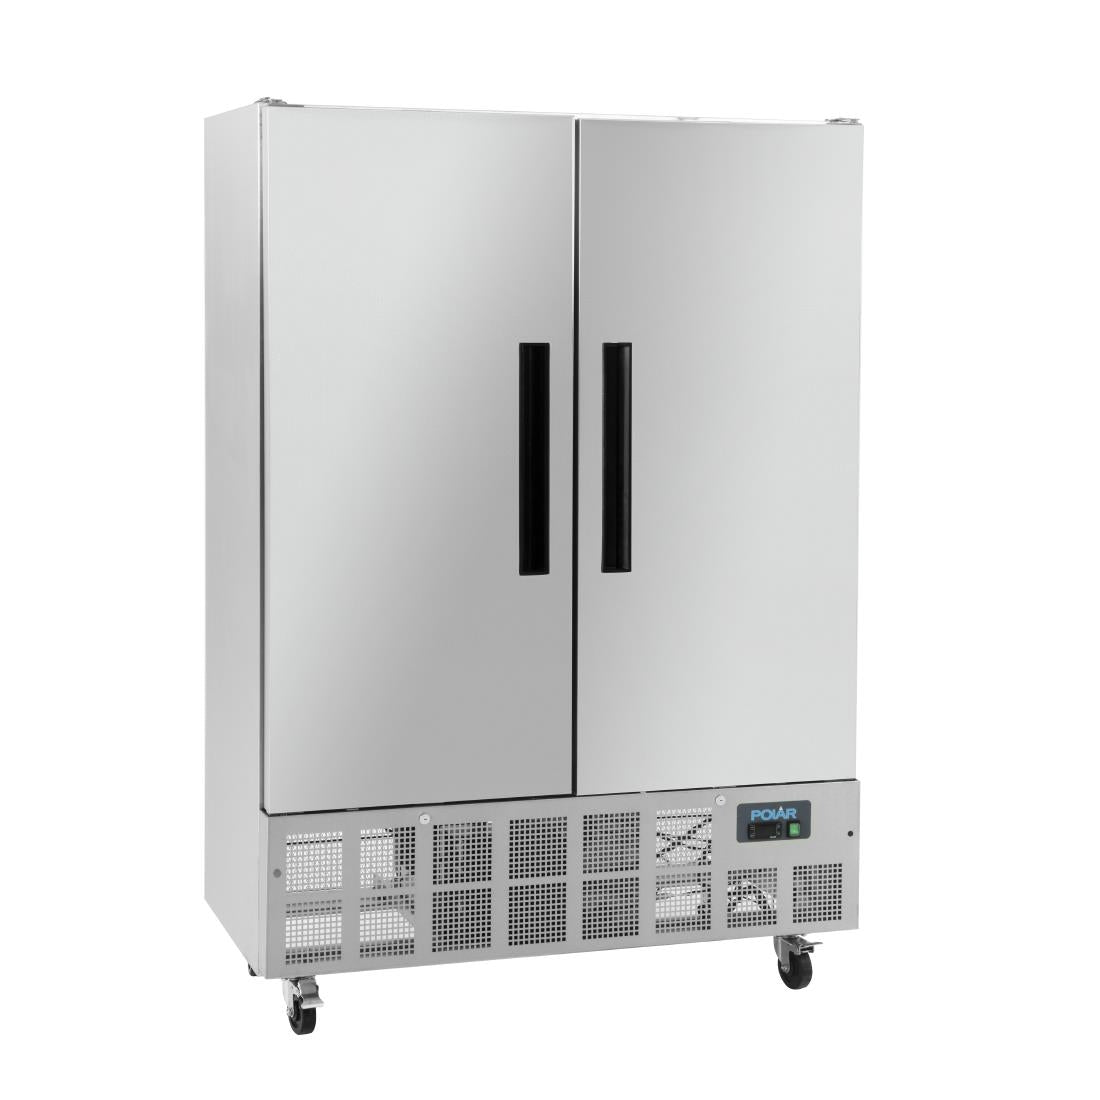 GD880 Polar G-Series Double Door Slimline Freezer 960Ltr JD Catering Equipment Solutions Ltd